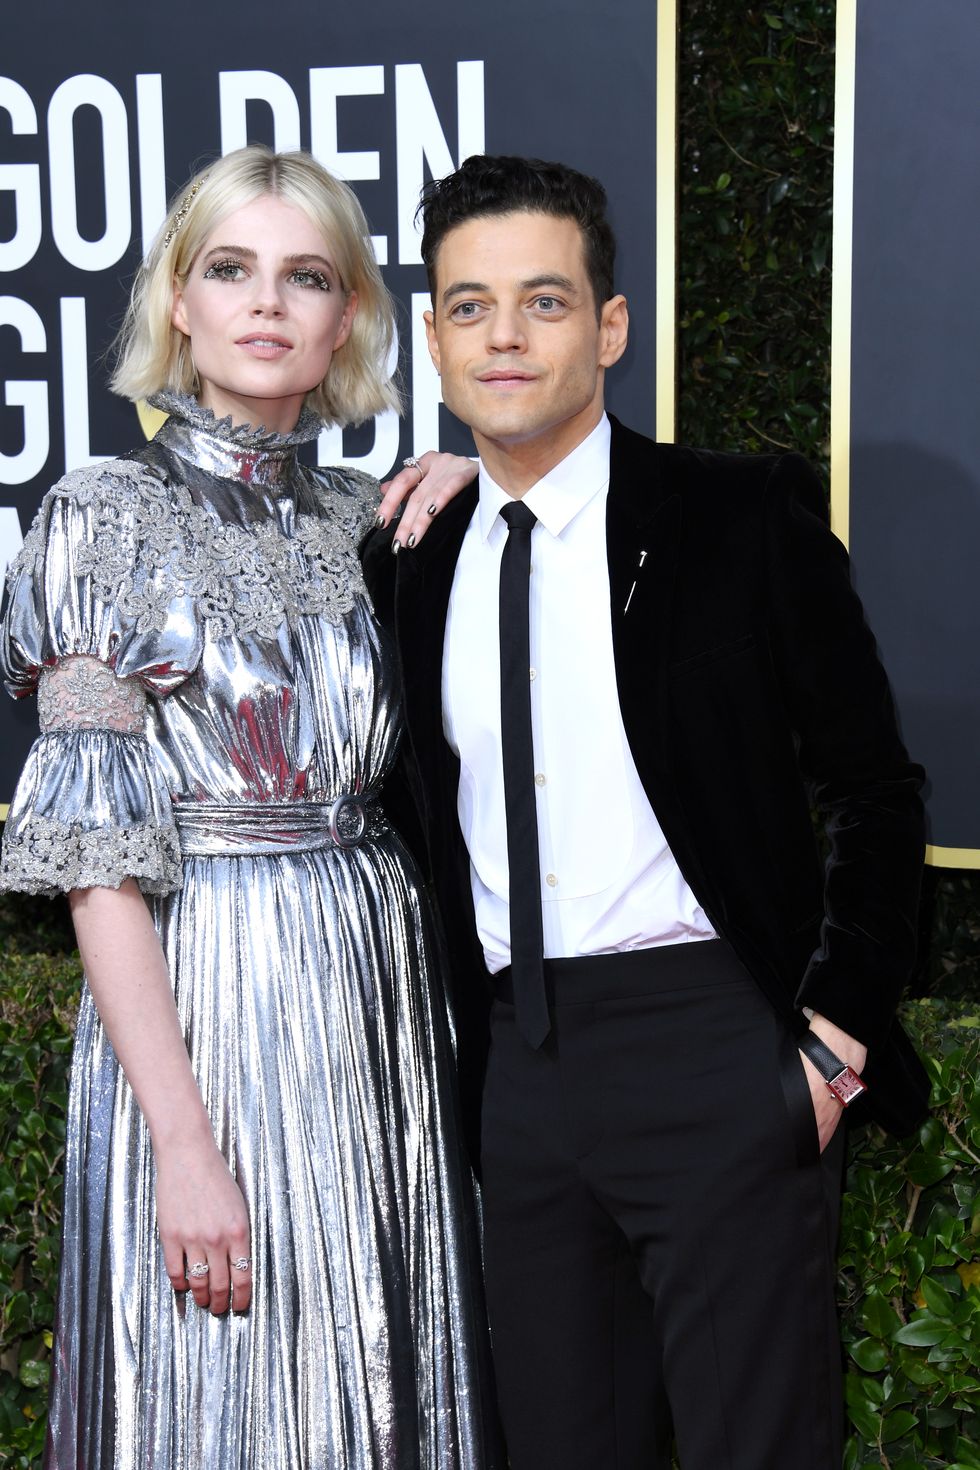 Golden Globe Awards - cutest couples